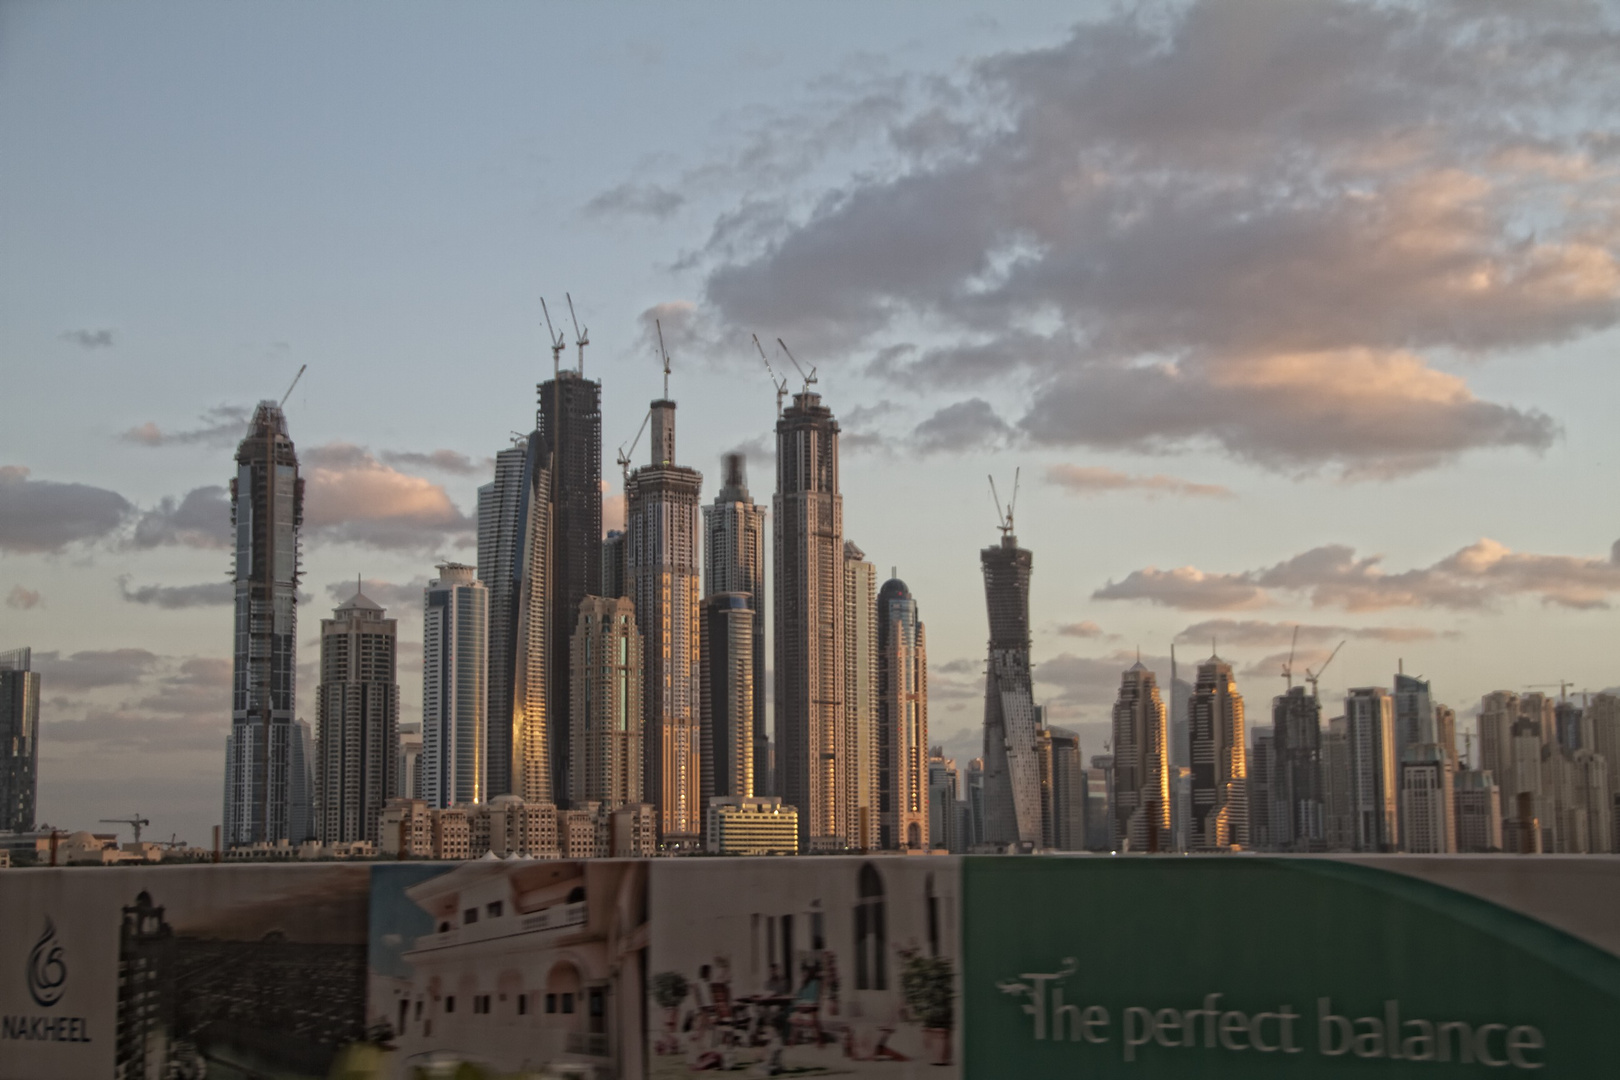 the perfect balance - Dubai